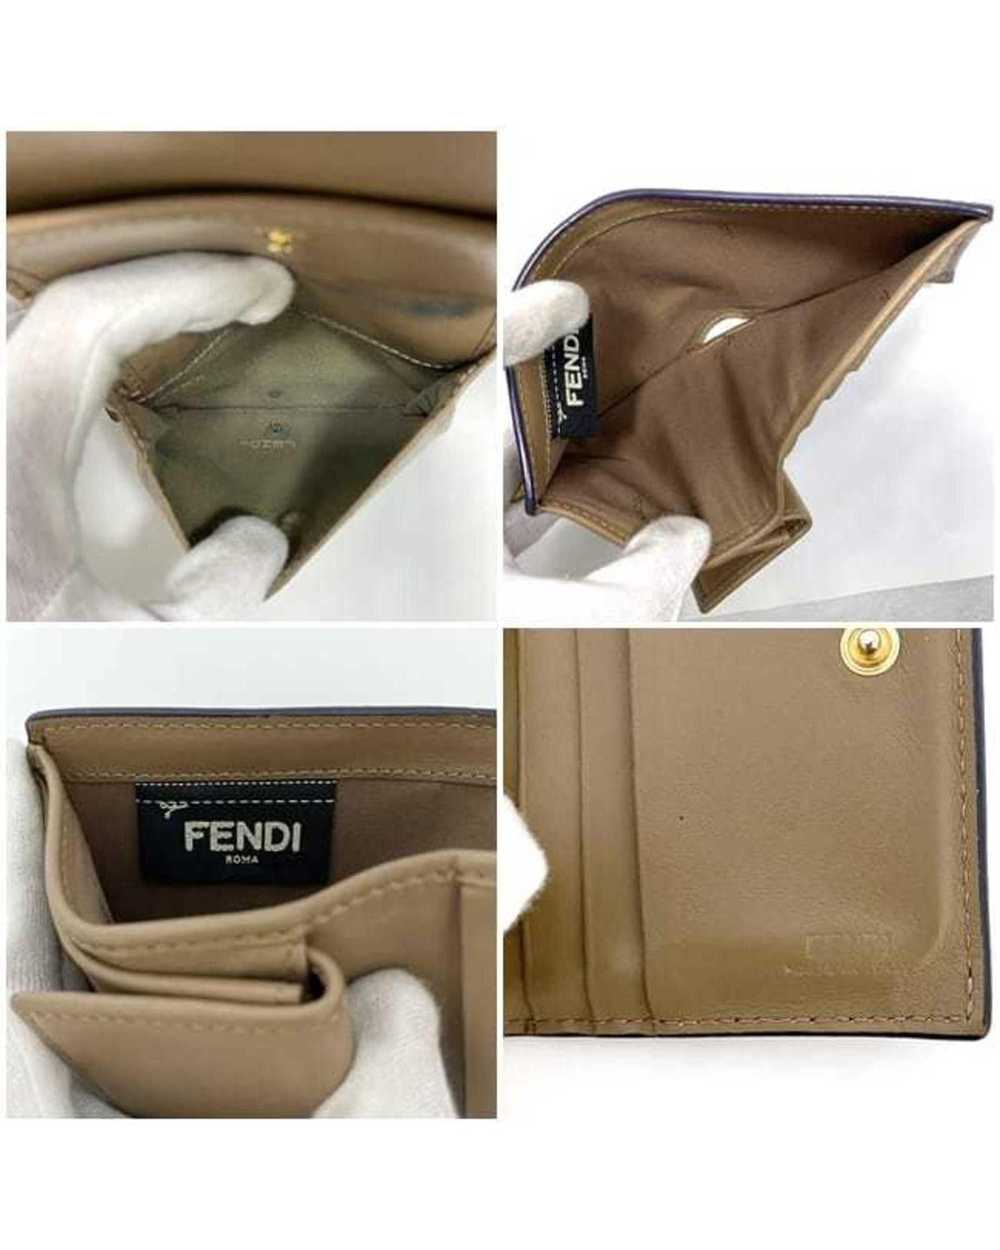 Fendi Burgundy Leather Compact Wallet - image 9